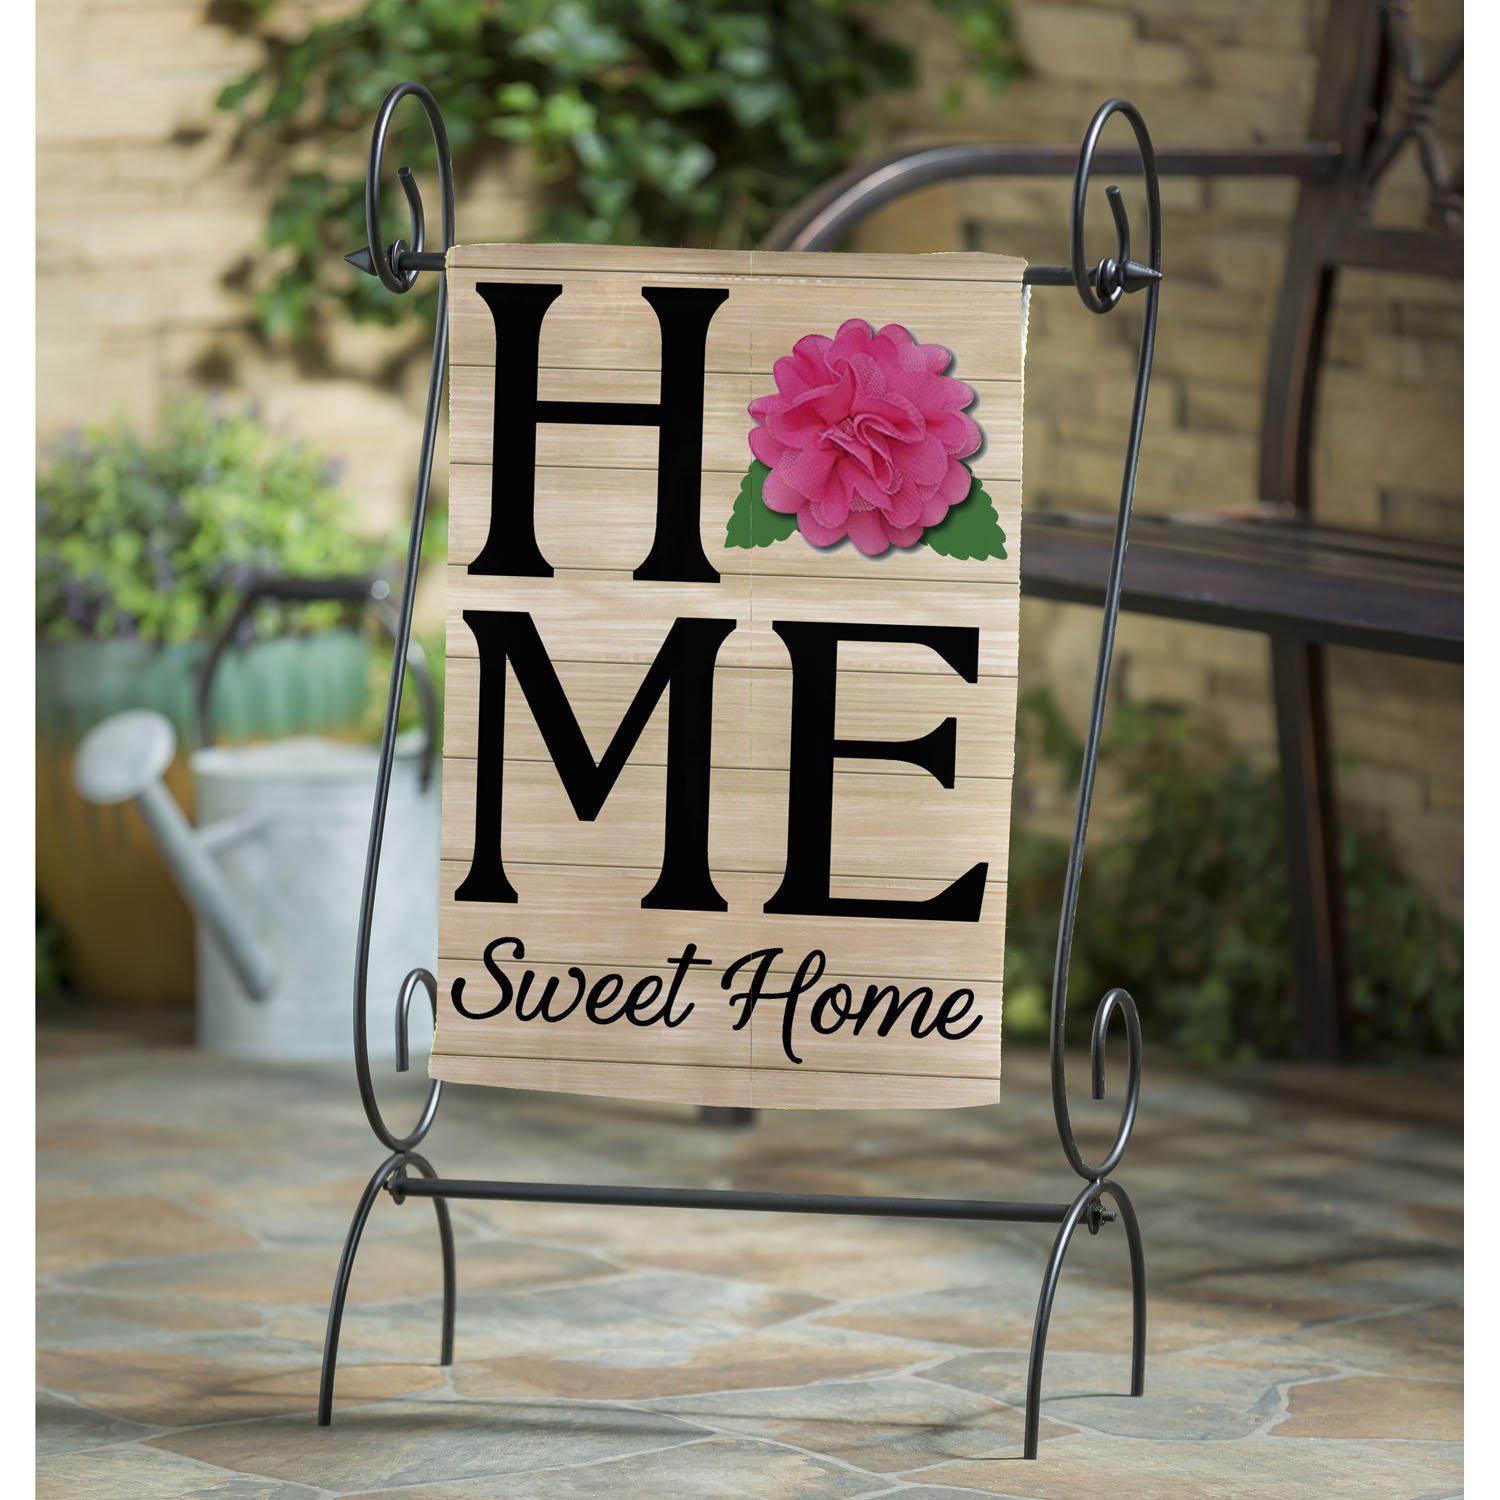 Home Sweet Home Interchangeable Garden Flag-Garden Flag-Fly Me Flag